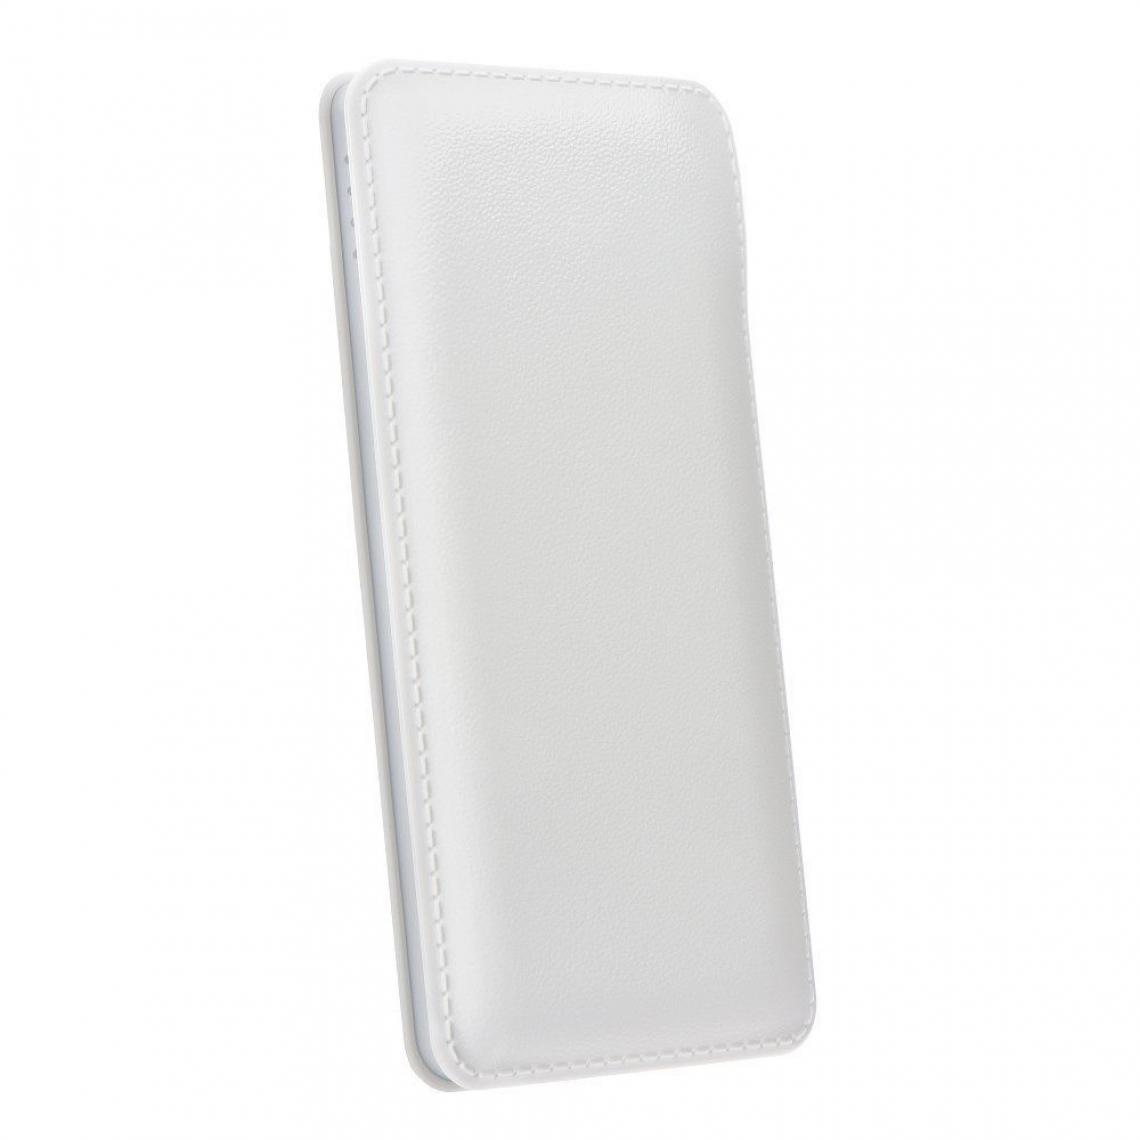 Ozzzo - Chargeur batterie externe 20000 mAh powerbank ozzzo blanc pour Acer Iconia One 8 B1-850 - Autres accessoires smartphone